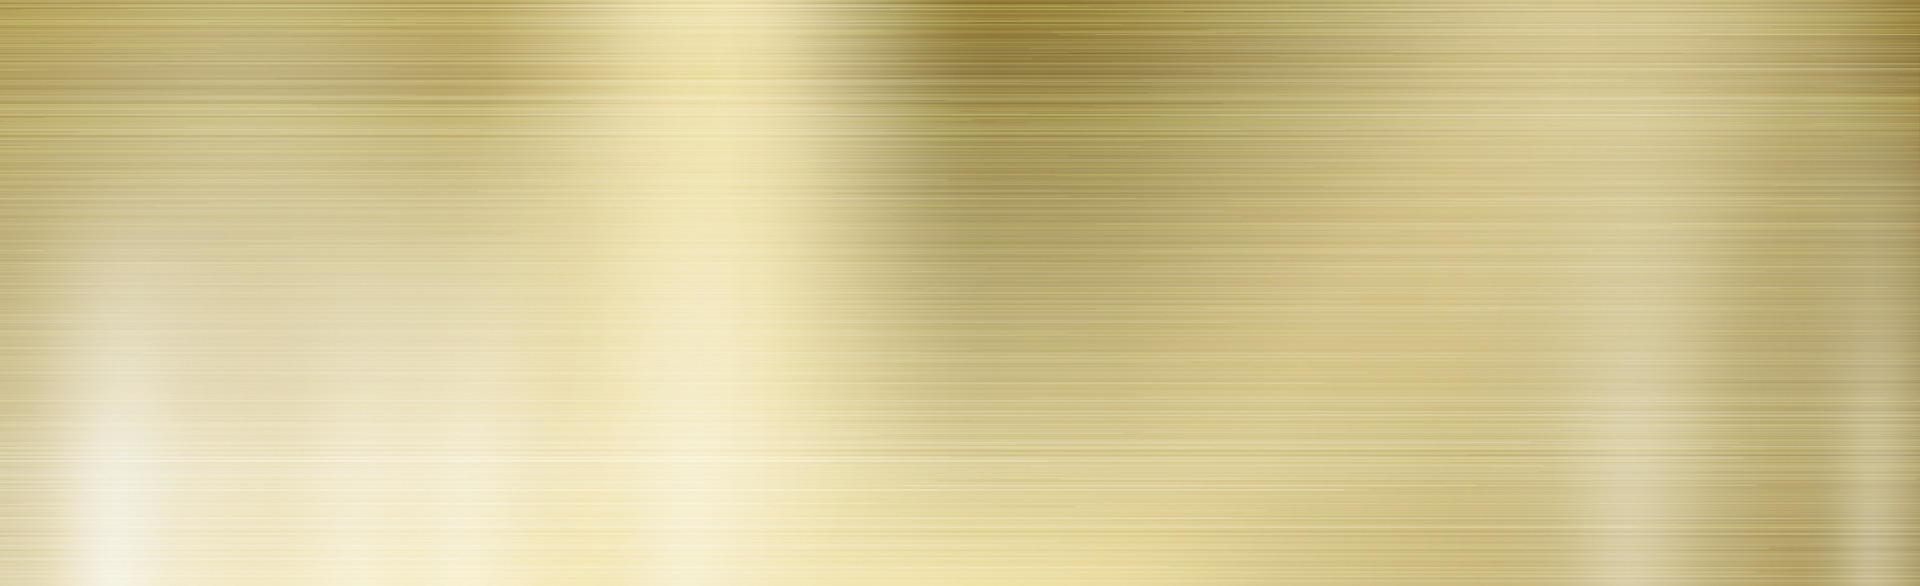 panorama textur av guld med glitter - vektor